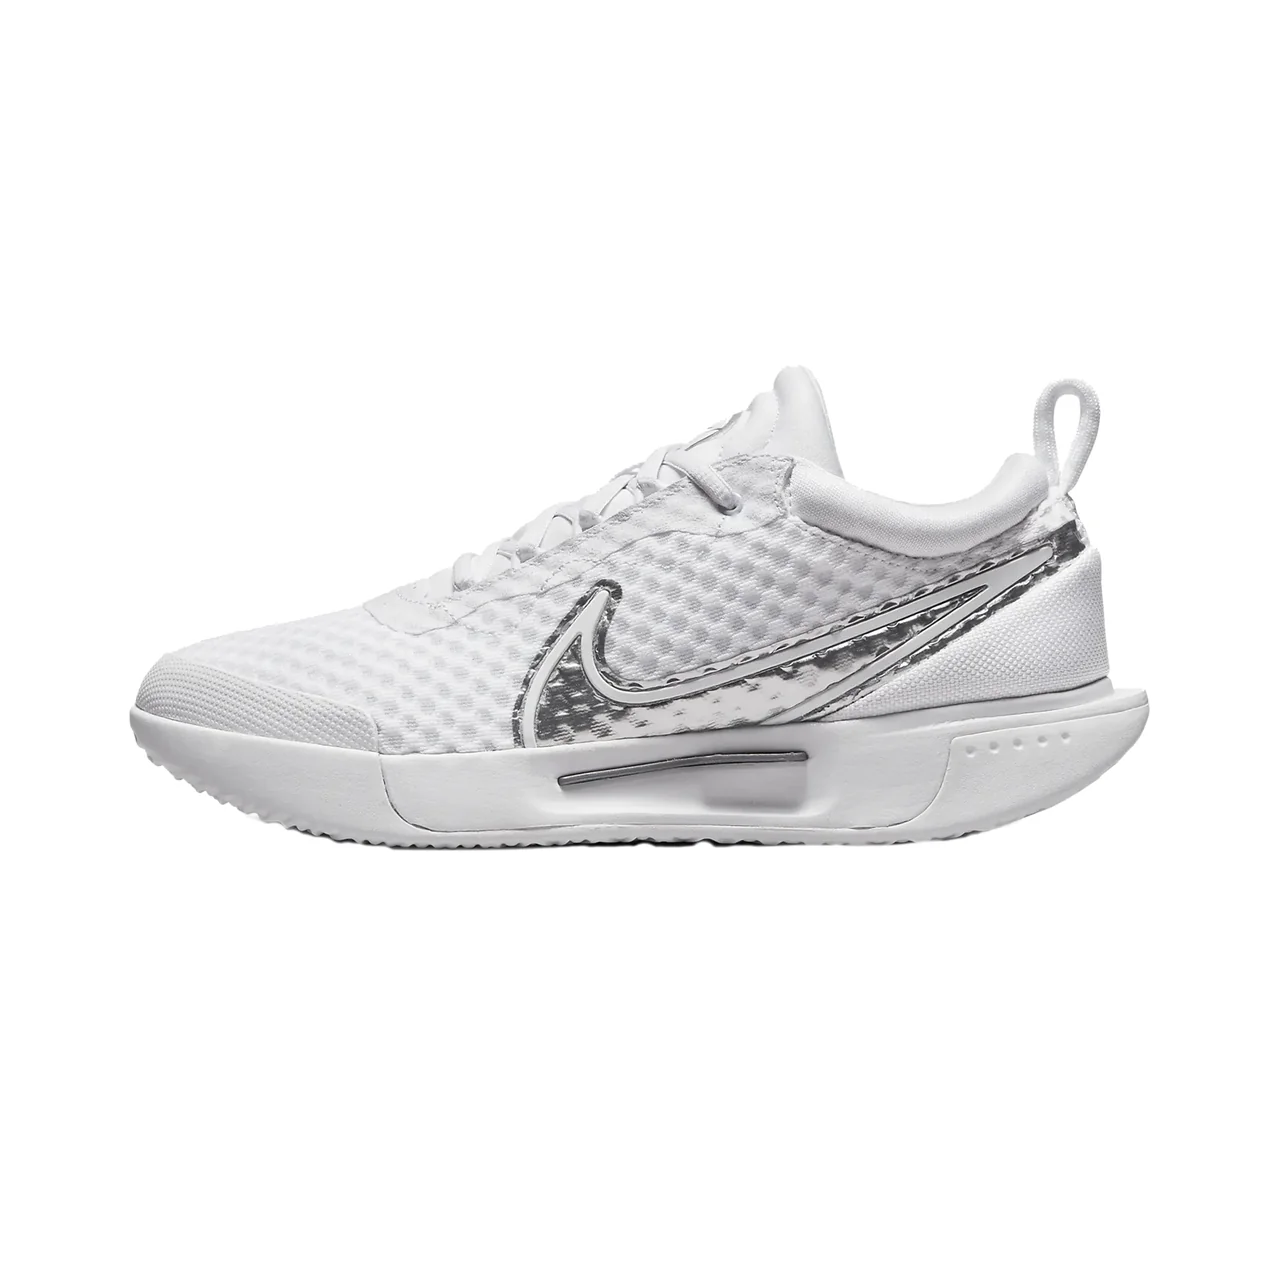 Nike Court Zoom Pro Tennis/Padel Women White/Metallic Silver